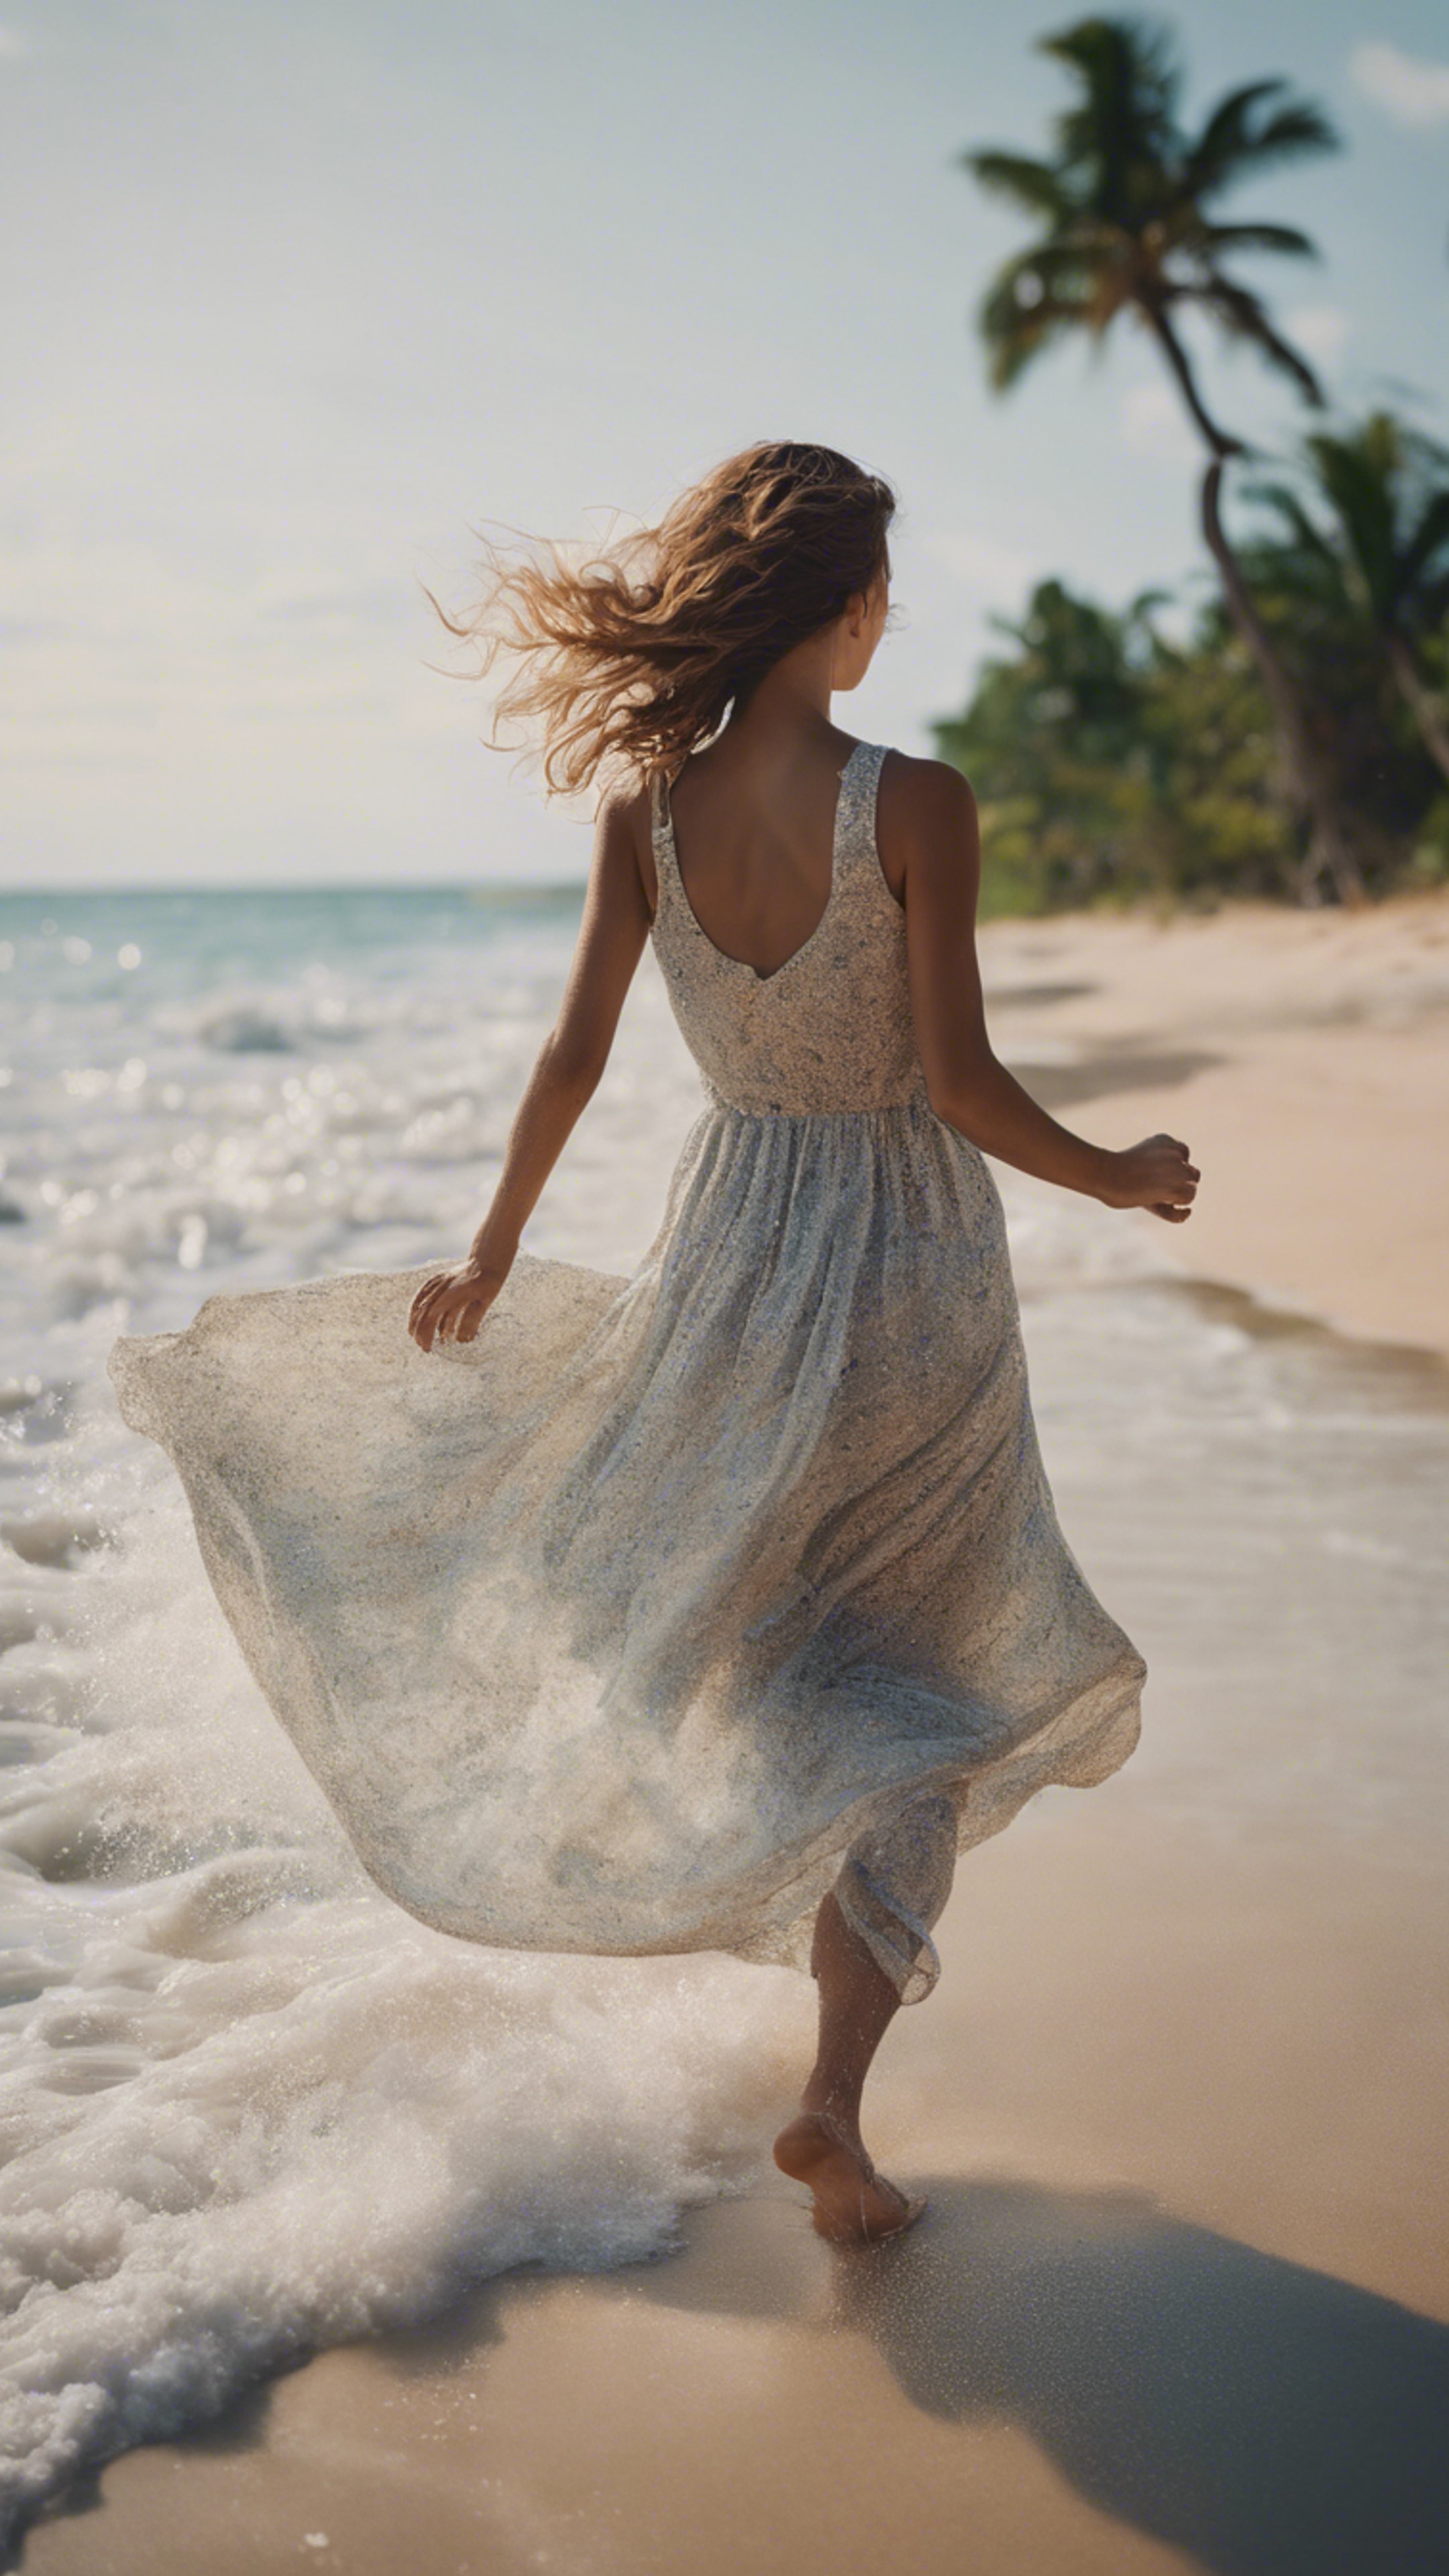 A girl in a flowy dress running alongside the sea at a tropical beach. ورق الجدران[6de970100921406193d7]